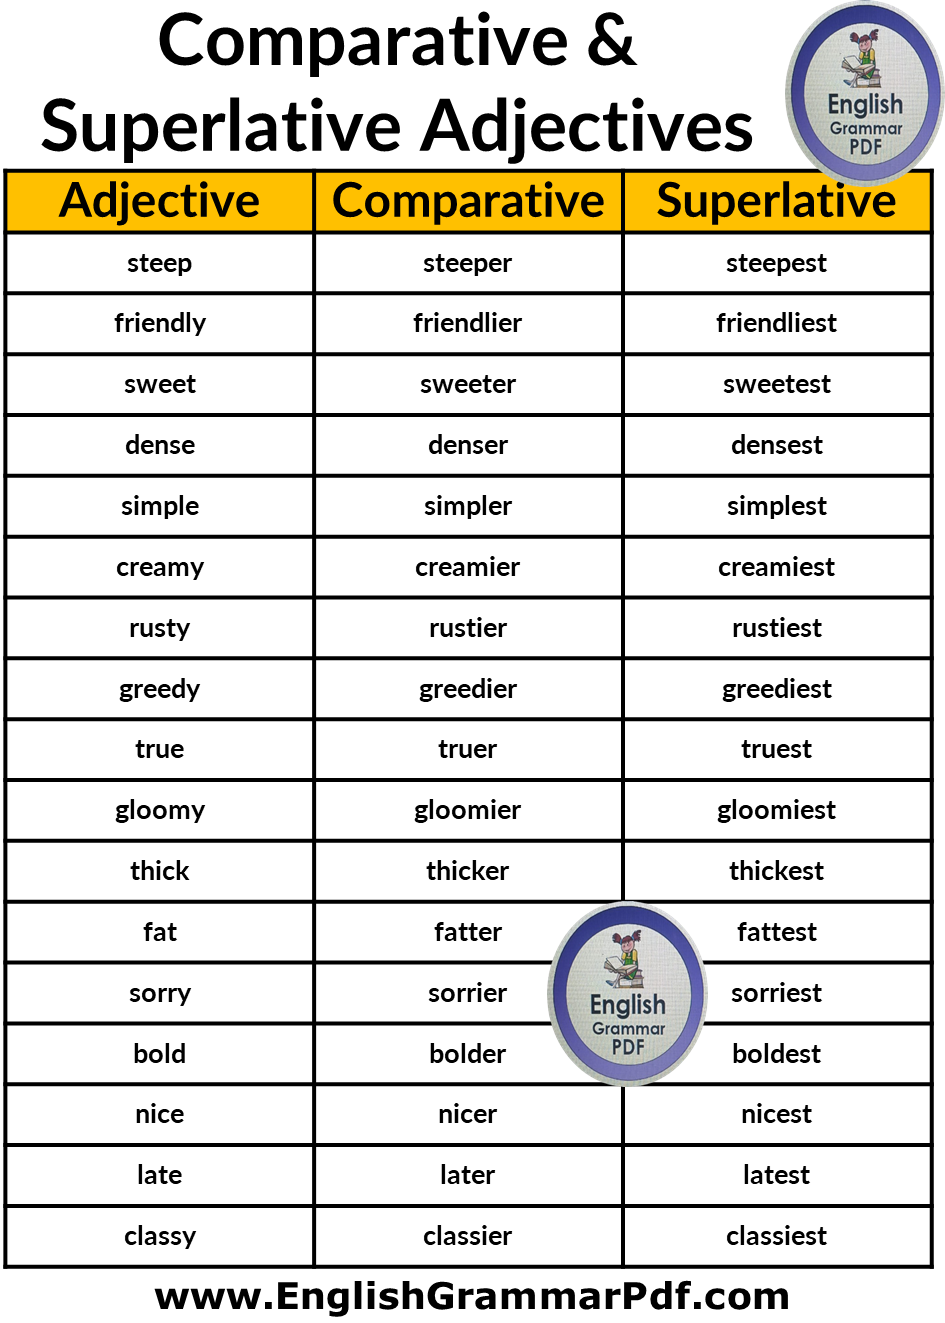 Superlative adjective for interesting